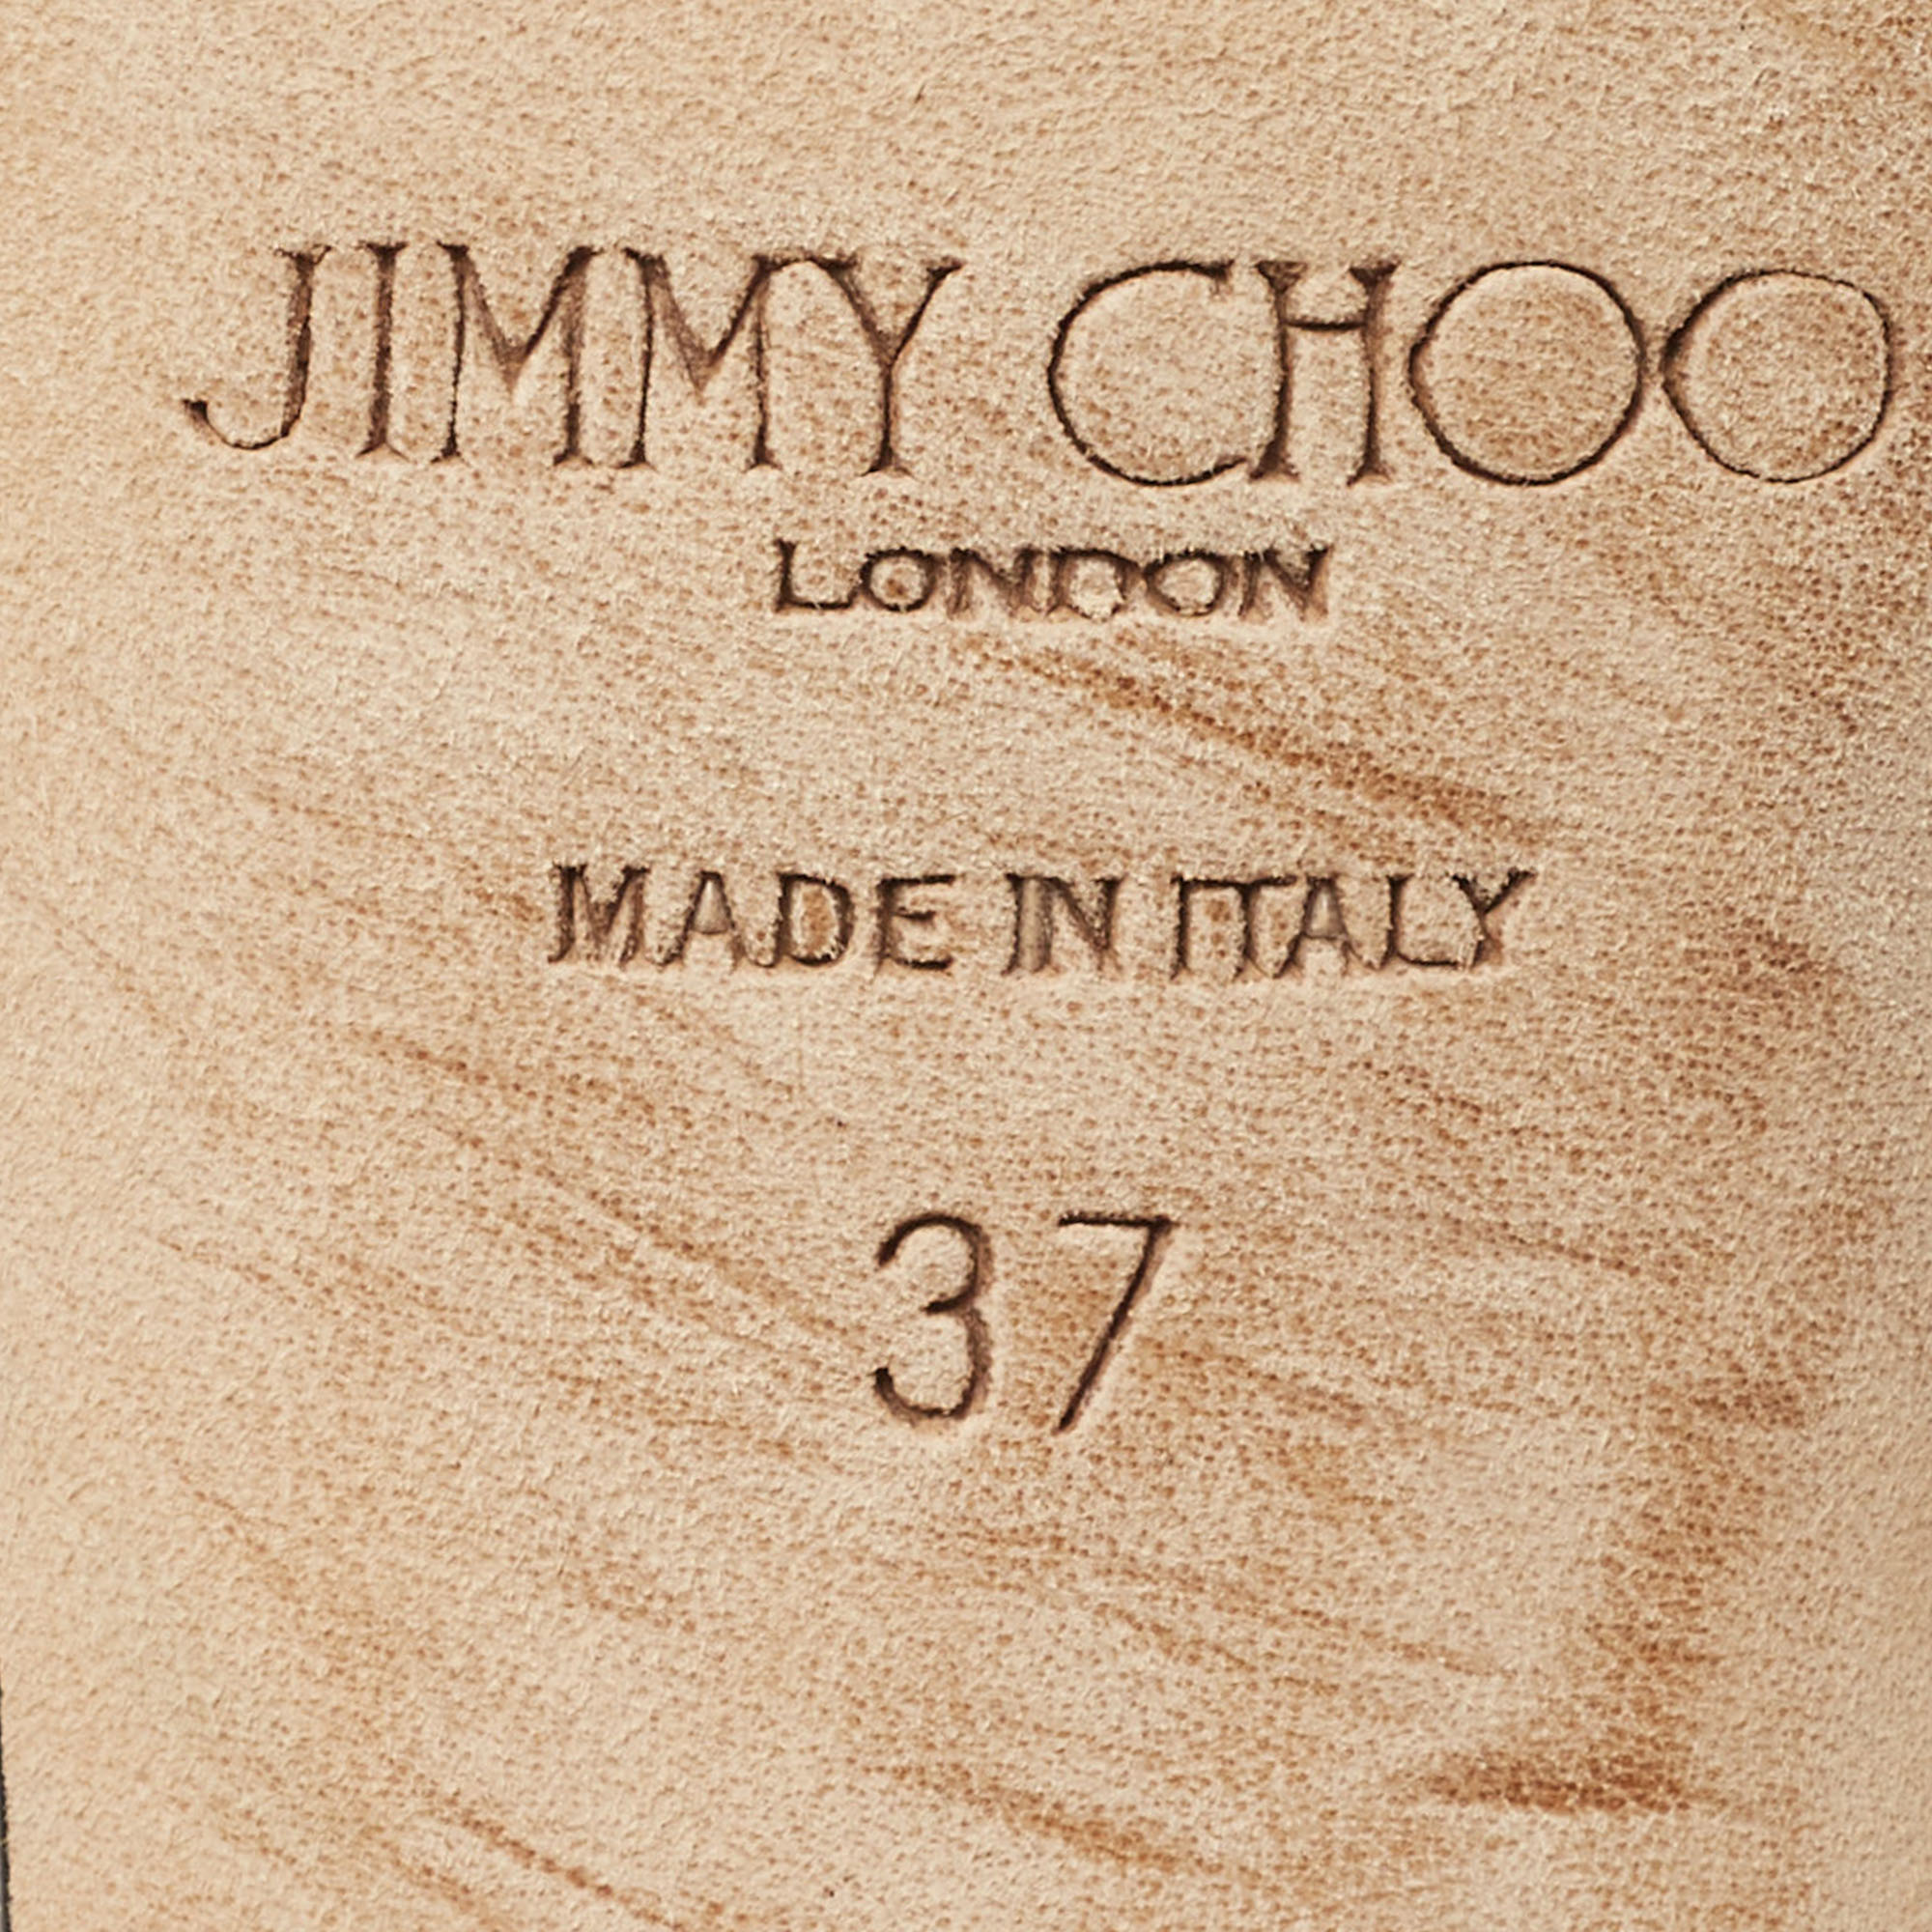 Jimmy Choo Black Leather Sandals Size 37